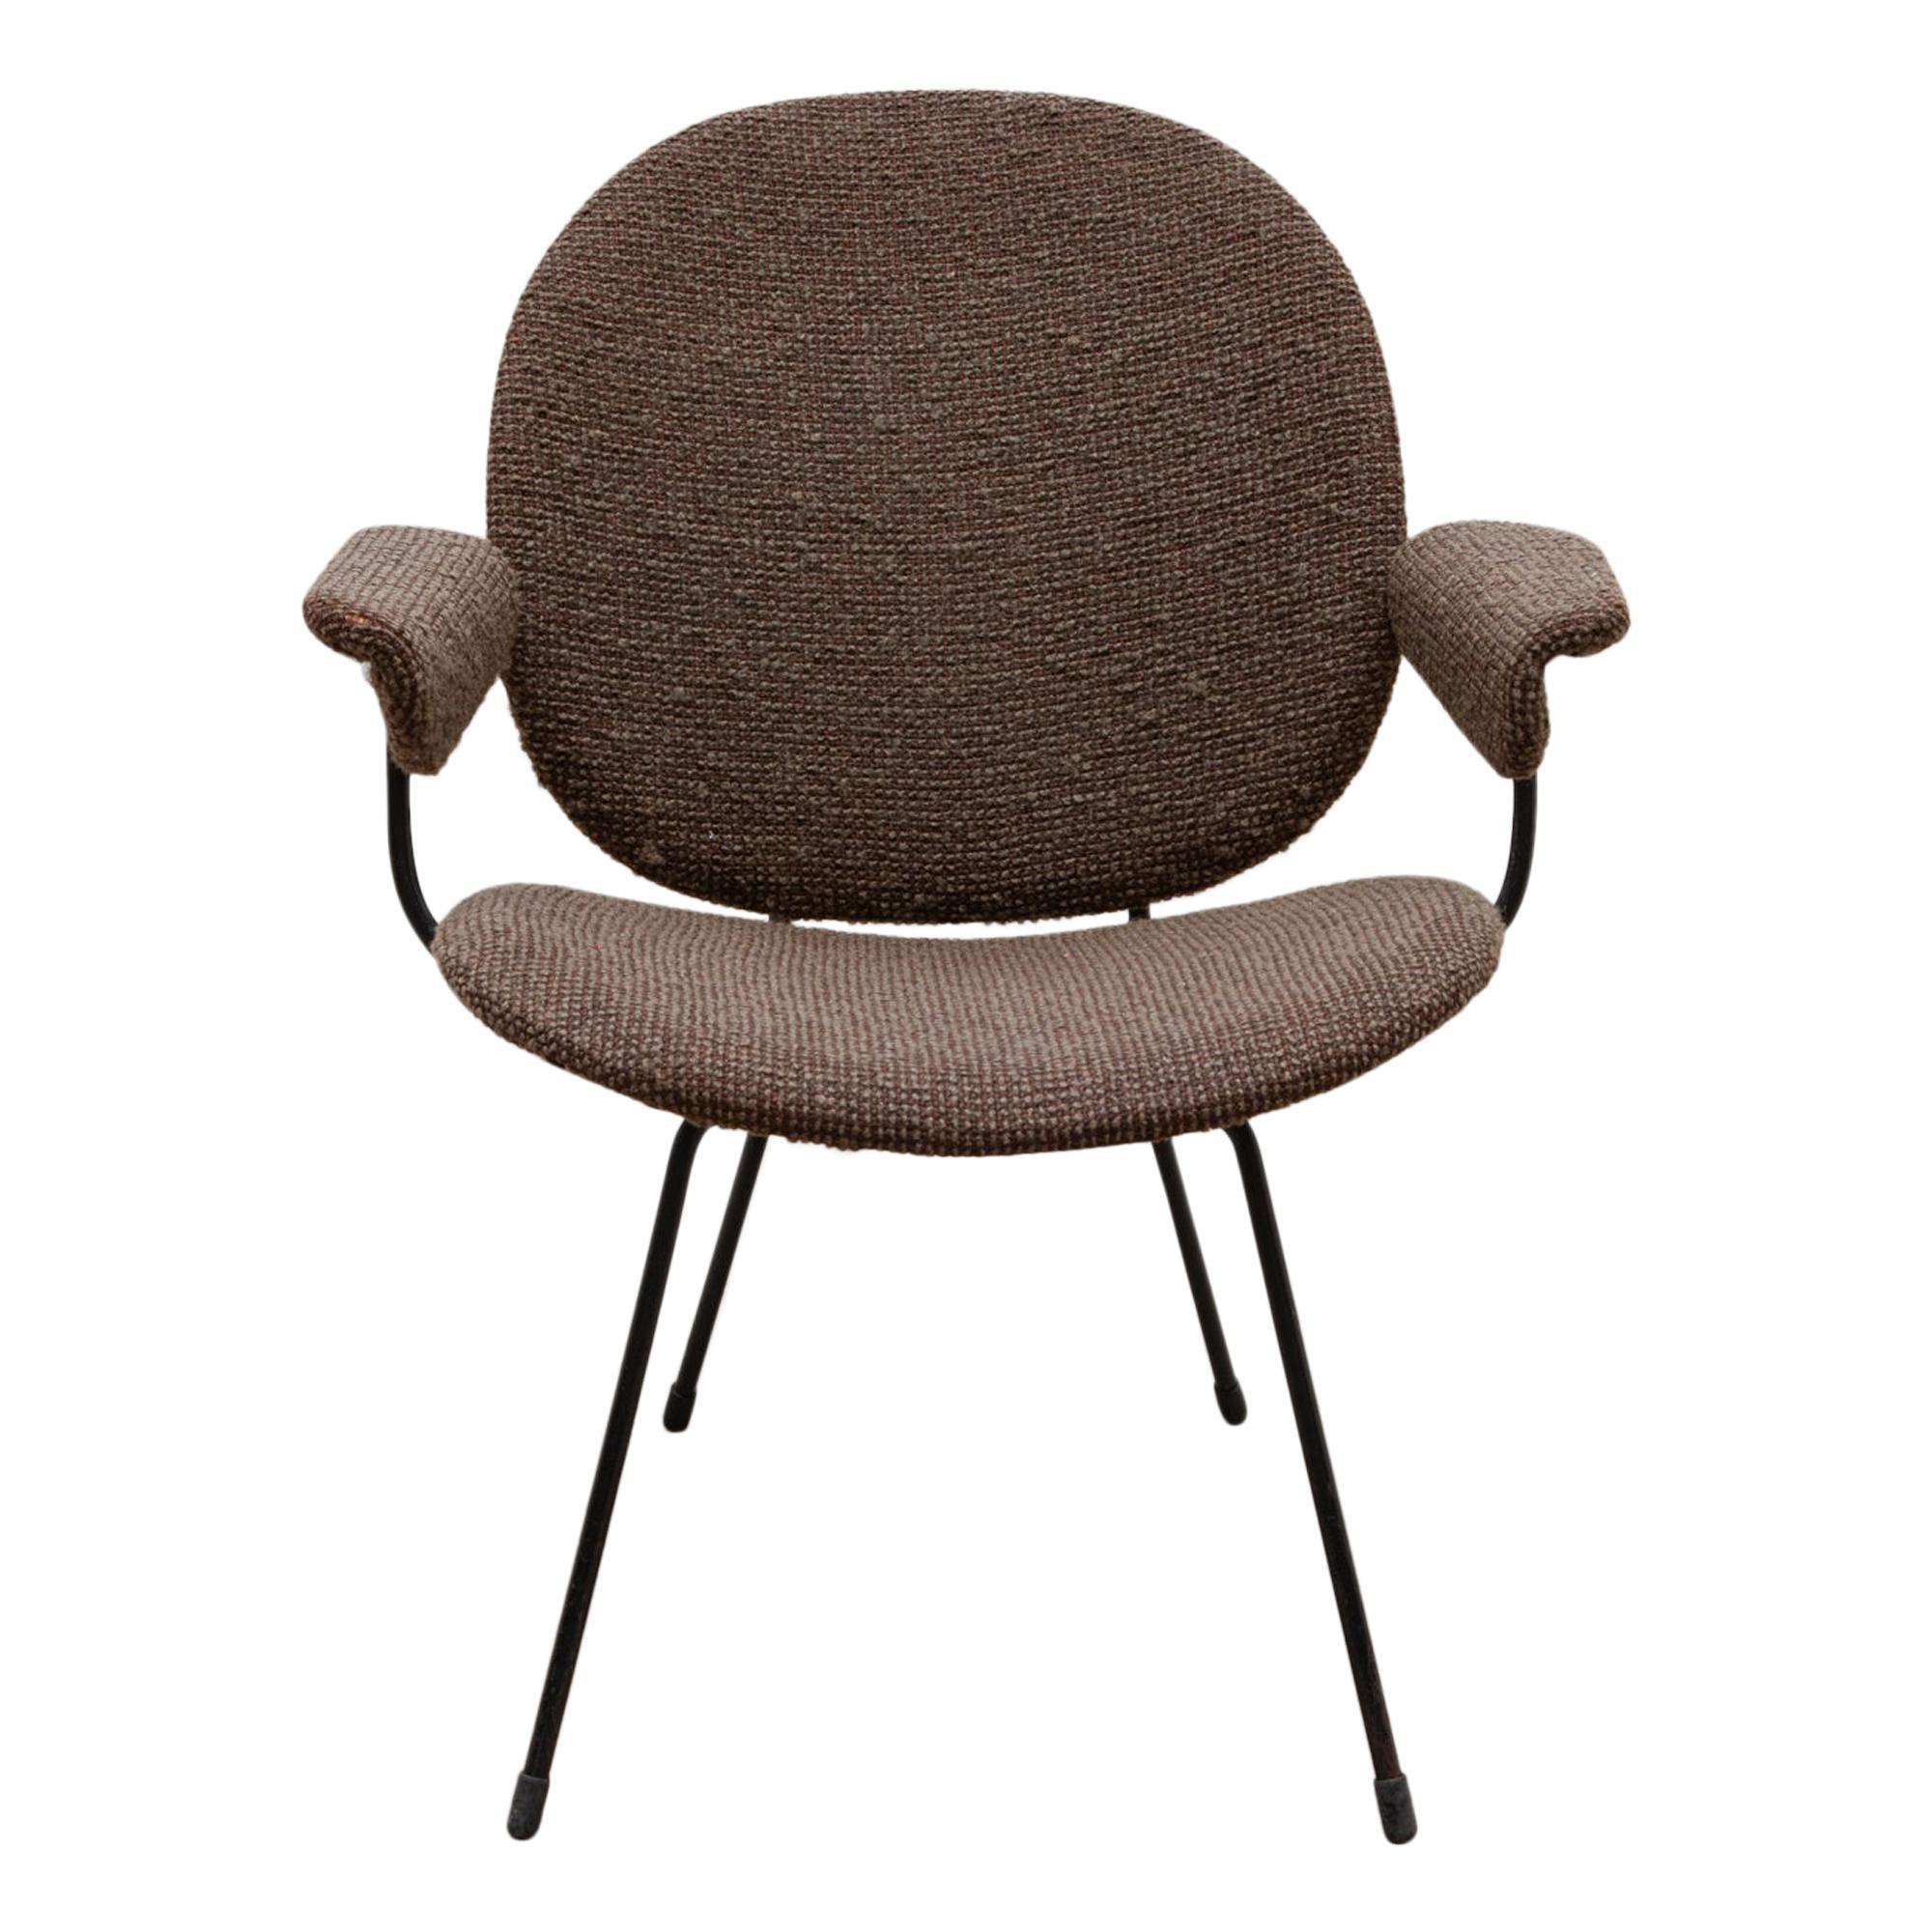 Dutch Design by Gispen Lounge Chair "Model 302" for Kembo